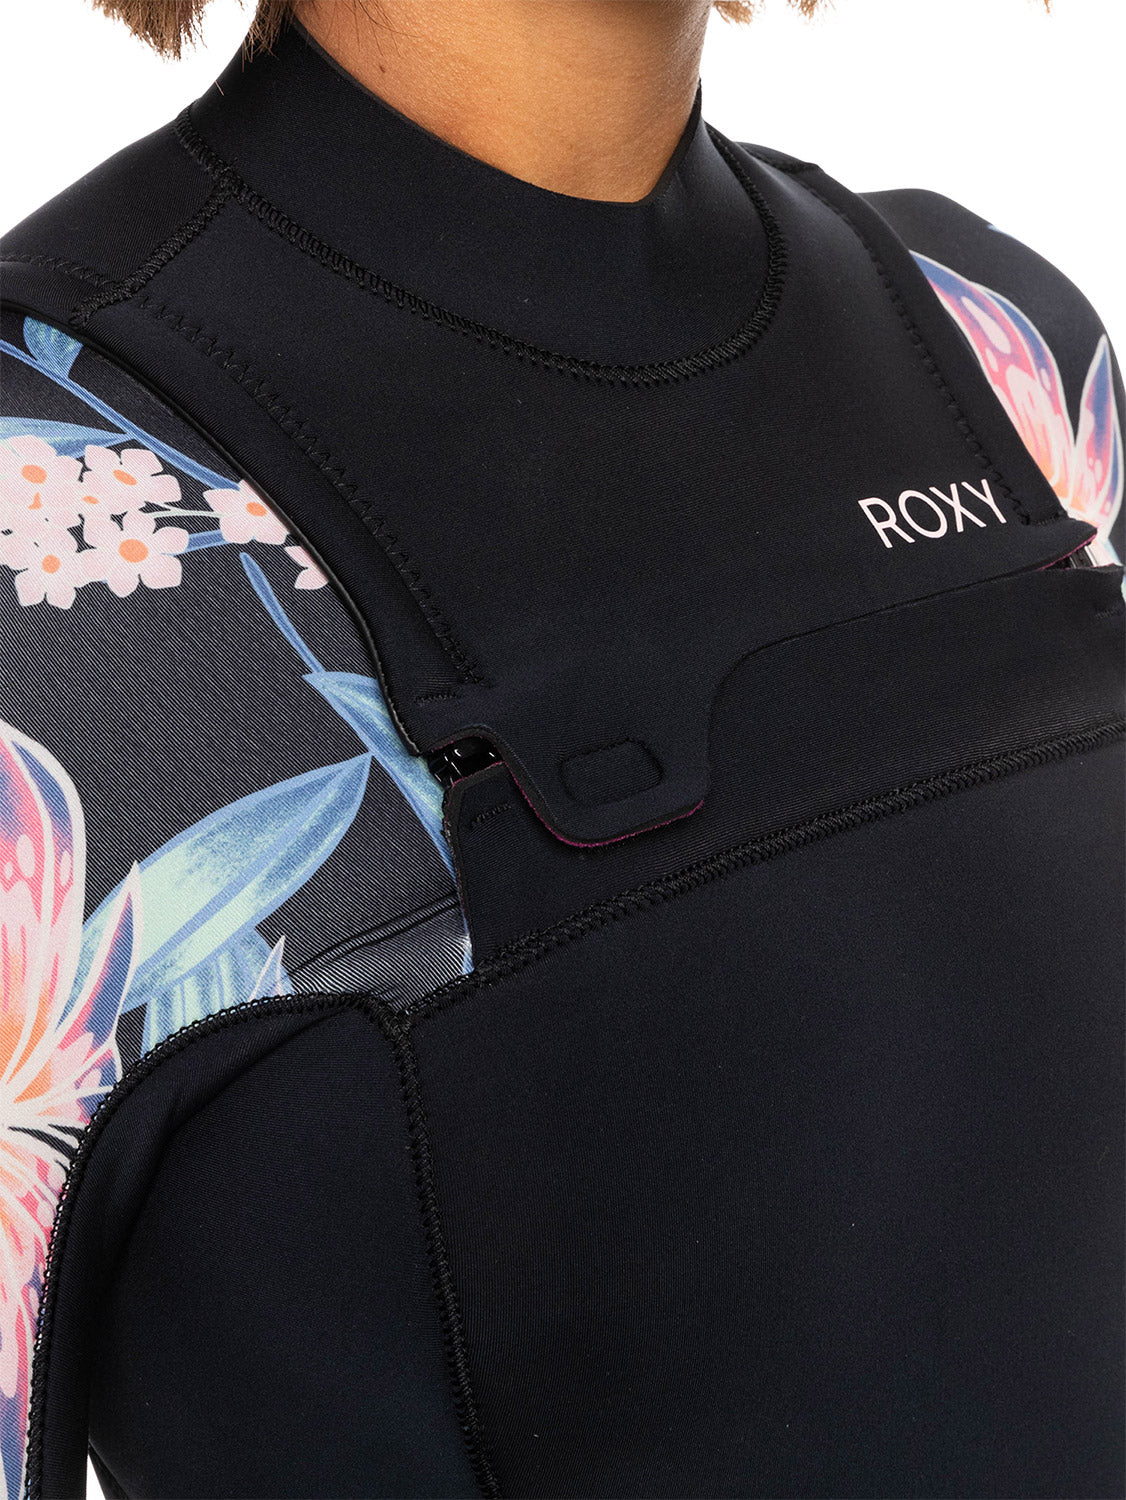 Roxy Ladies 4/3mm Swell Series Front Zip Wetsuit